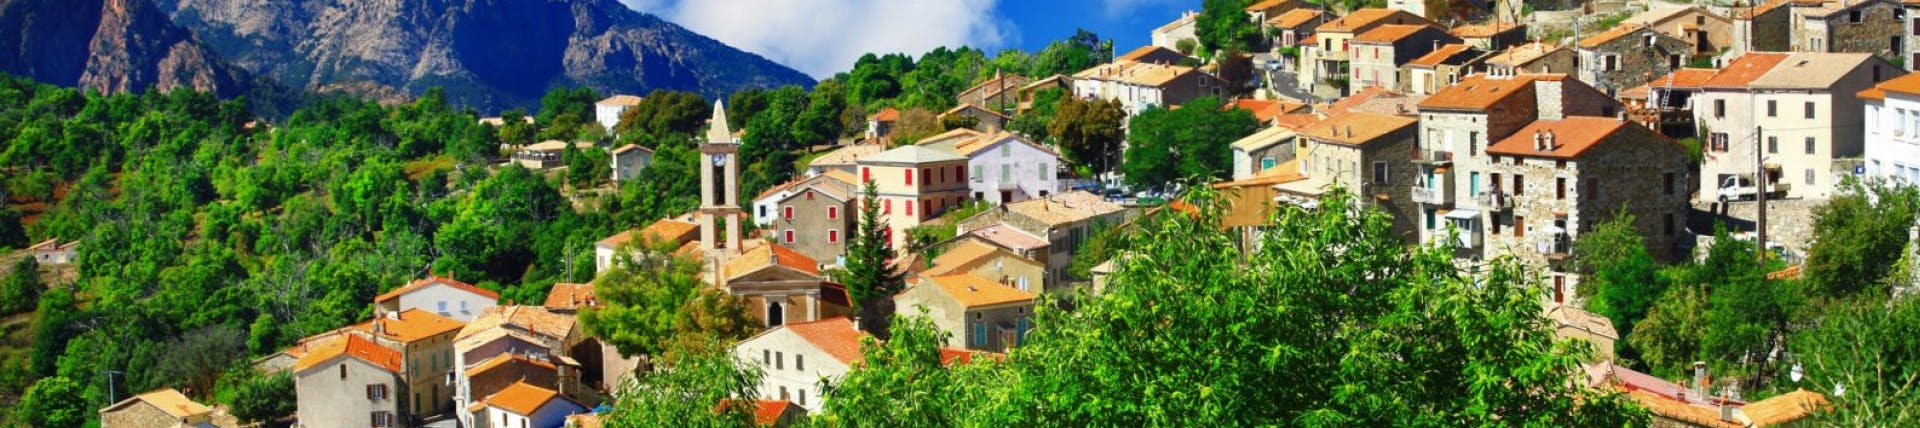 Picture of Corsica